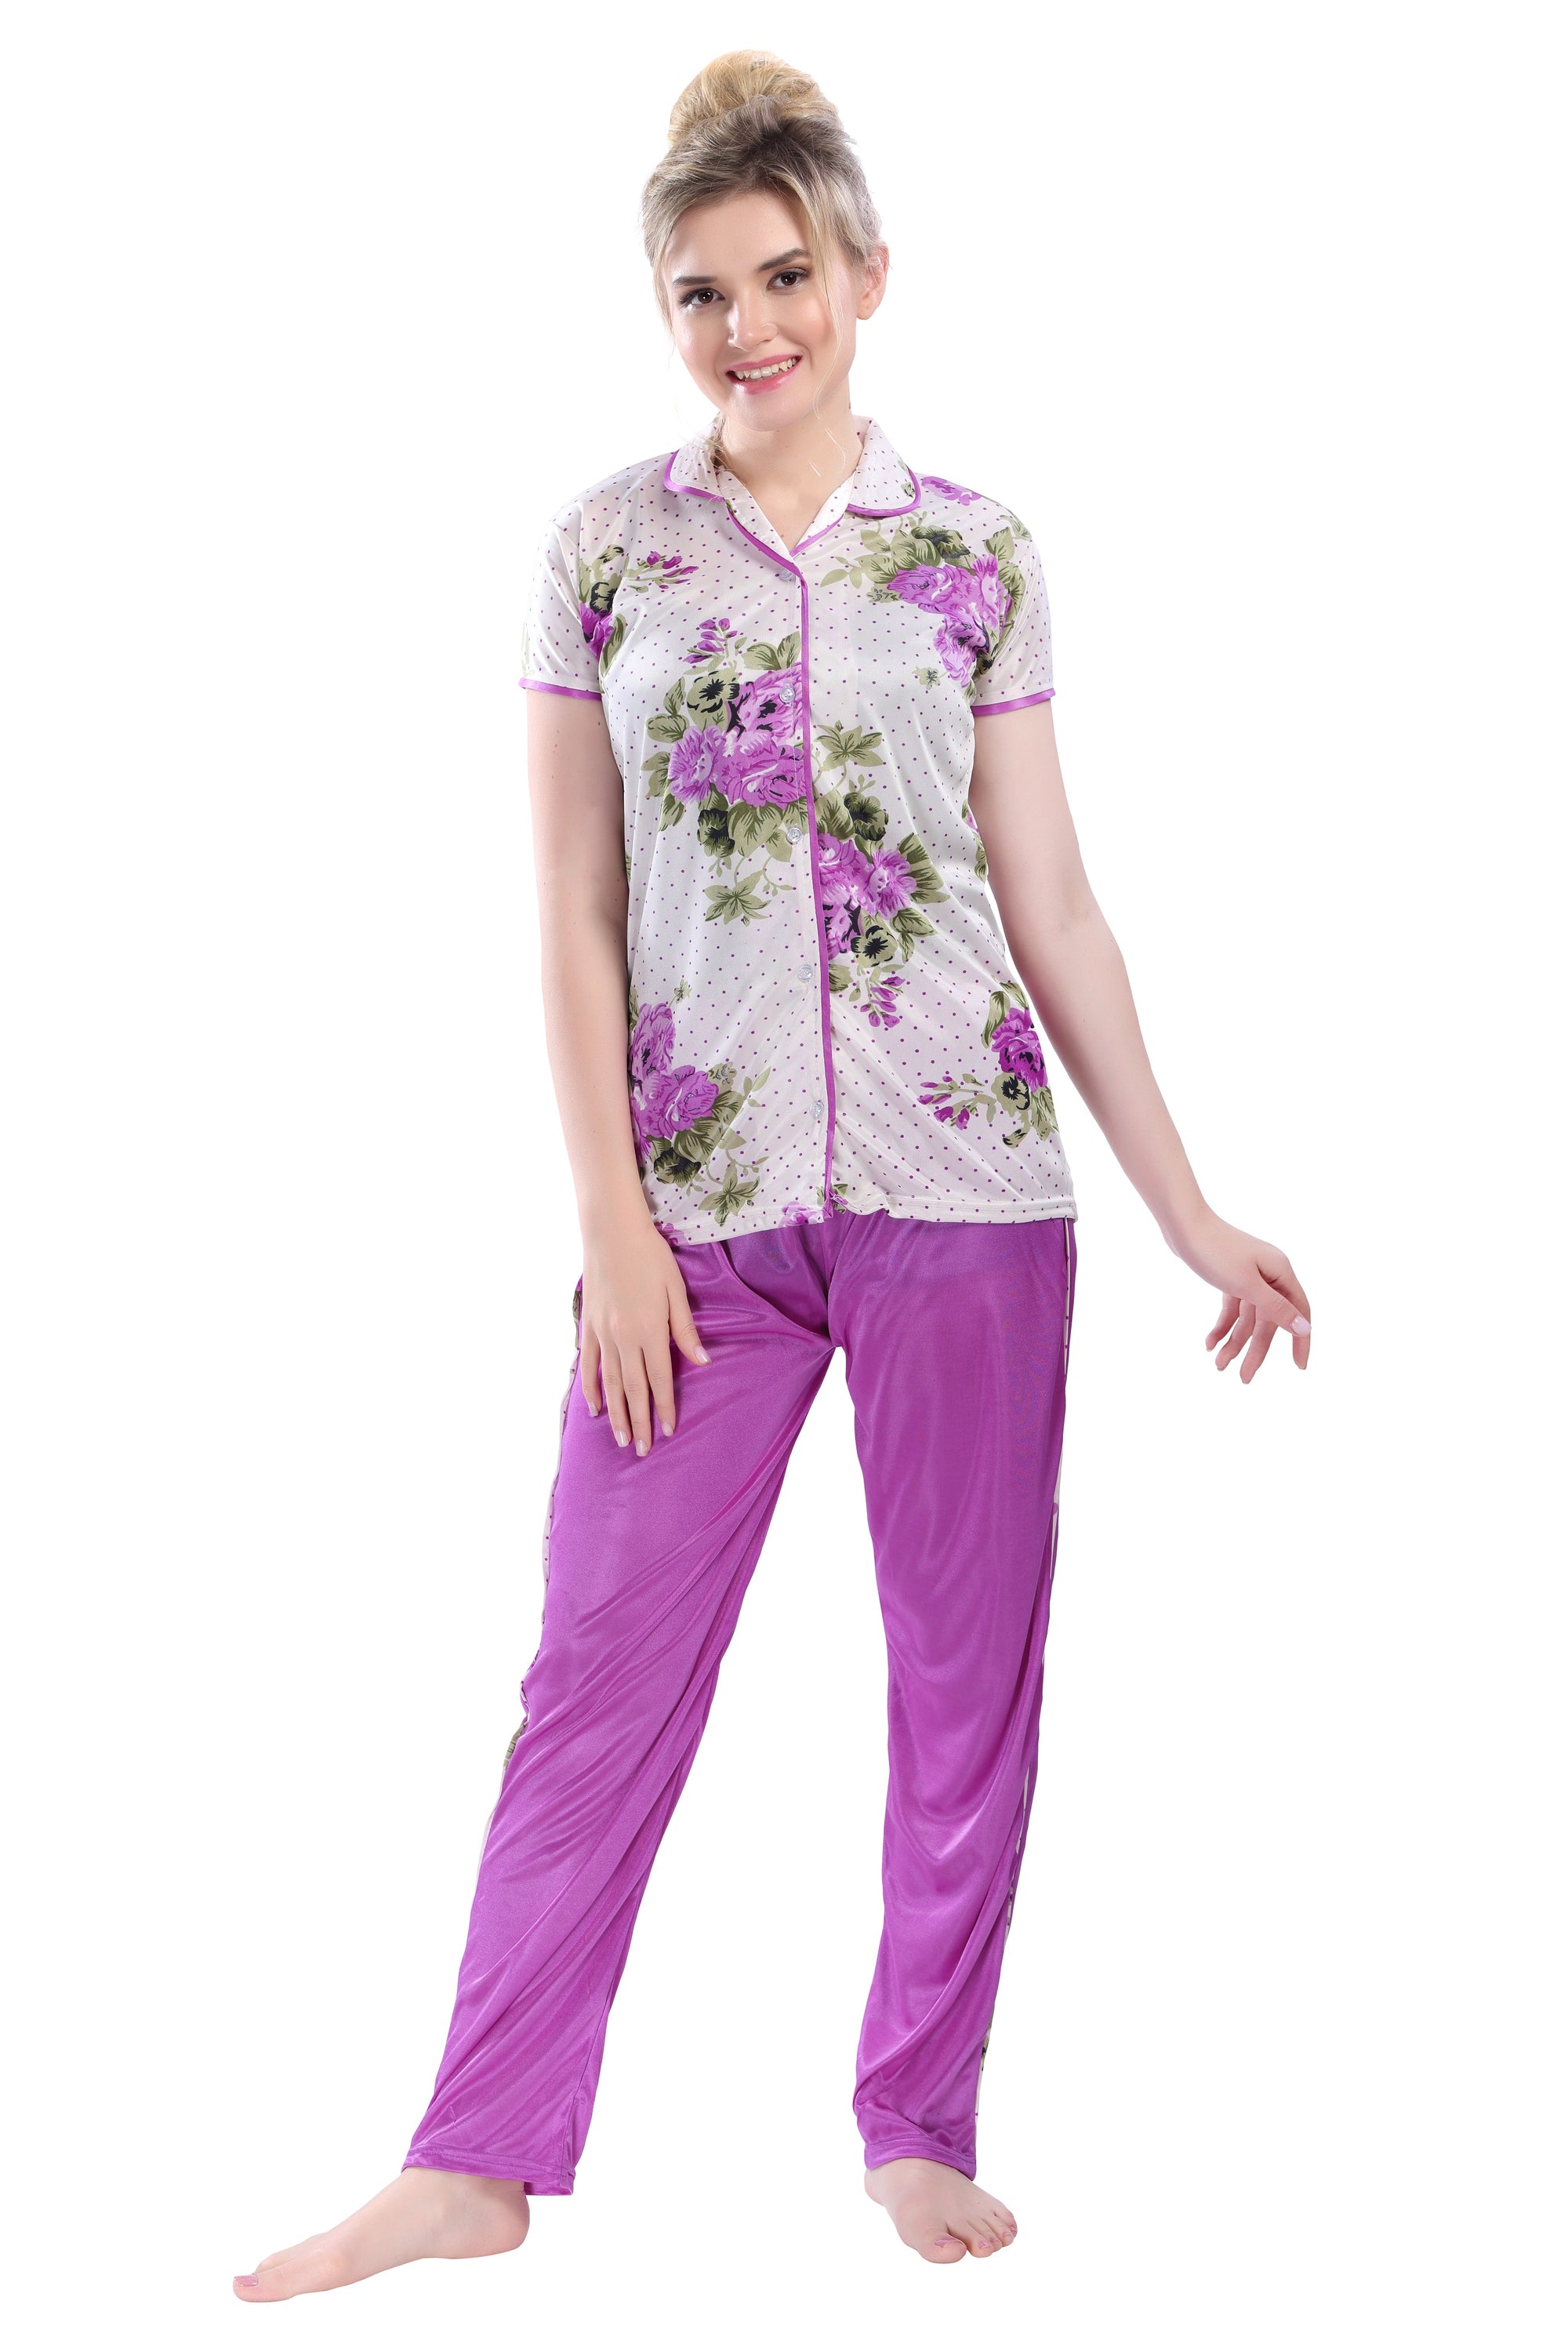 Style Dunes Printed Night Suit for Women - Flower Print Satin Shirt and Pyjama Set (Front Open Collar Night Suit) - Wowxop